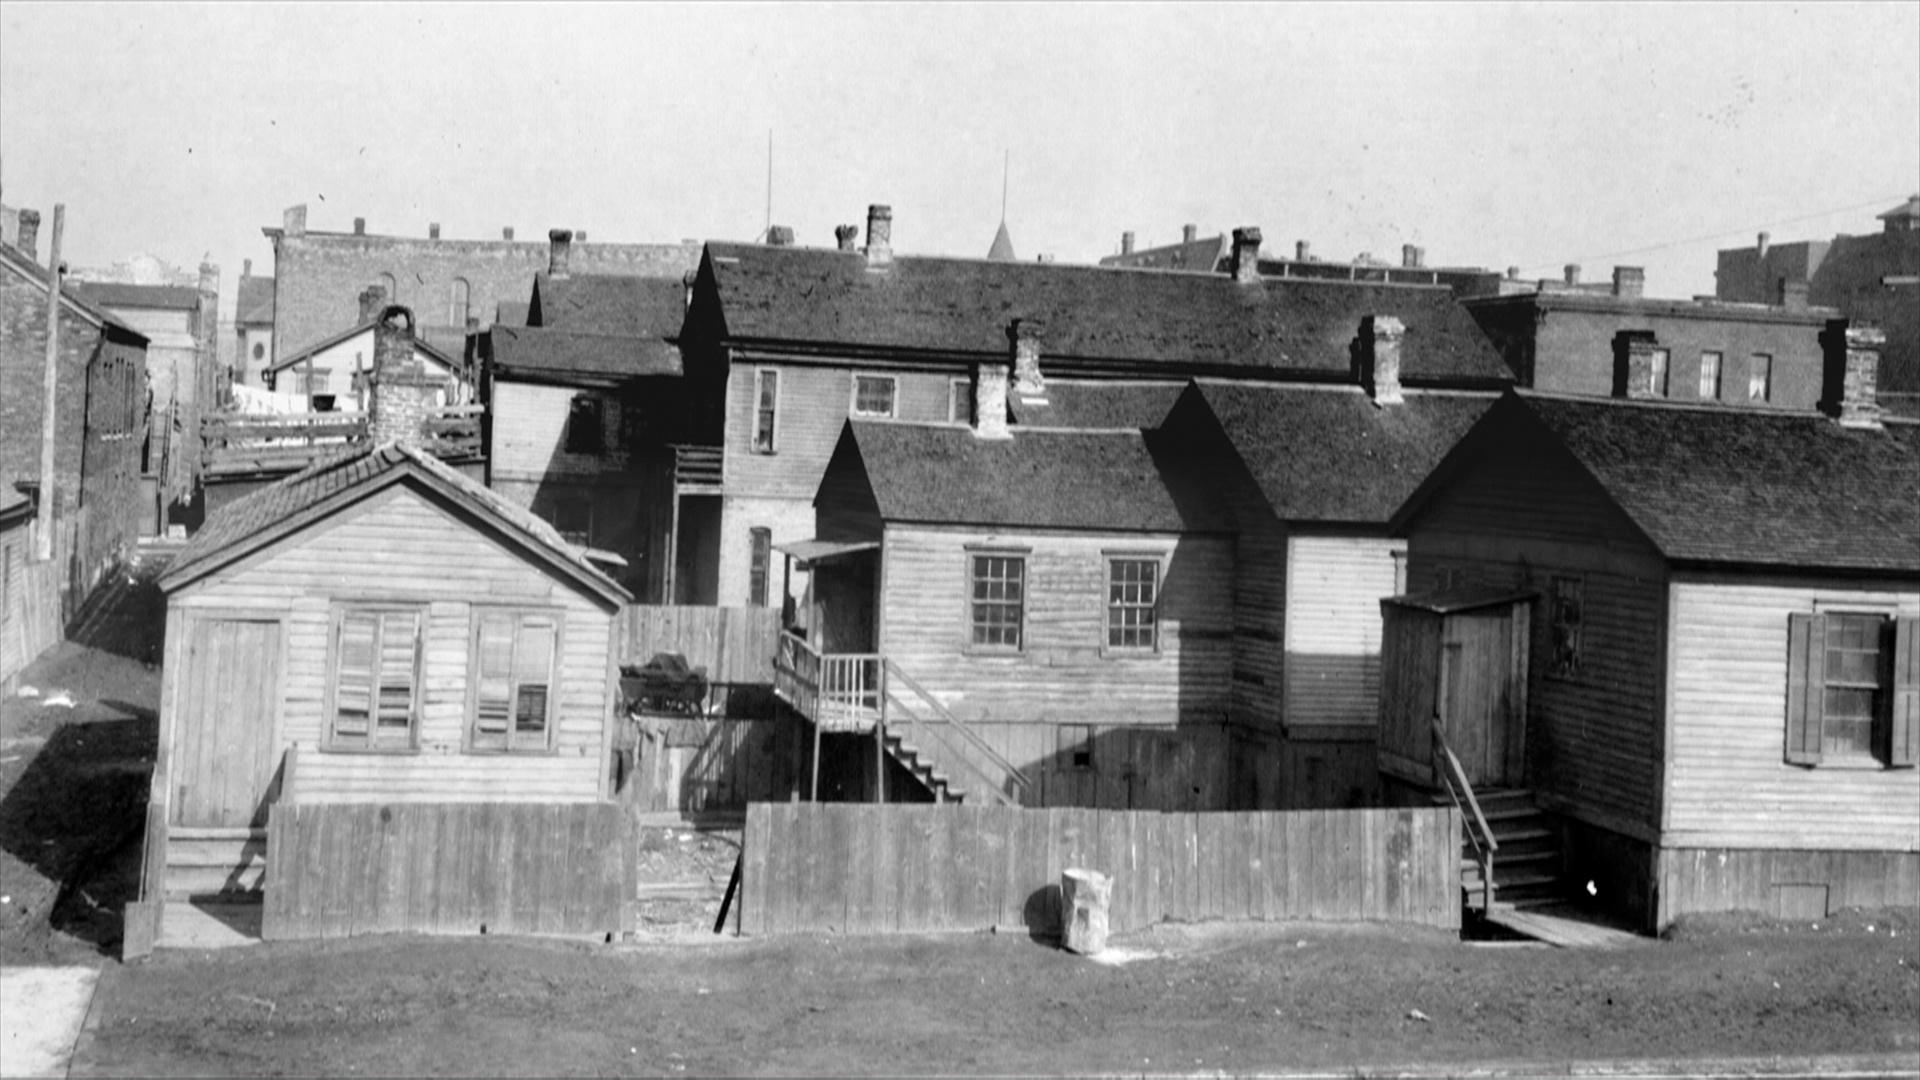 Wood shanties in Chicago circa 1871